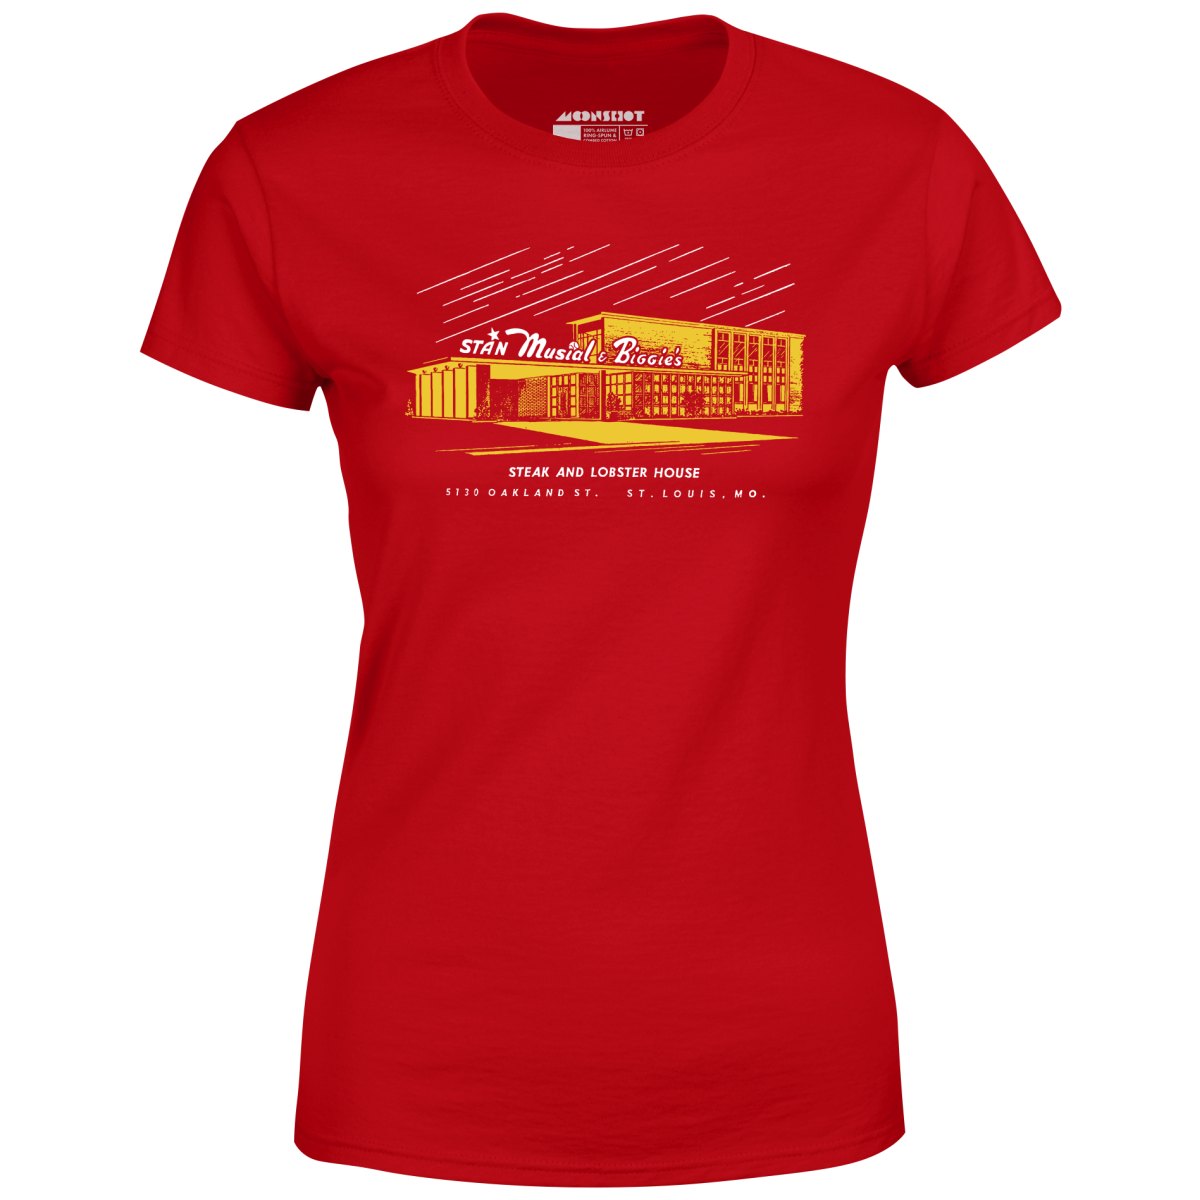 Stan Musial & Biggie's - St. Louis, MO - Vintage Restaurant - Women's T-Shirt